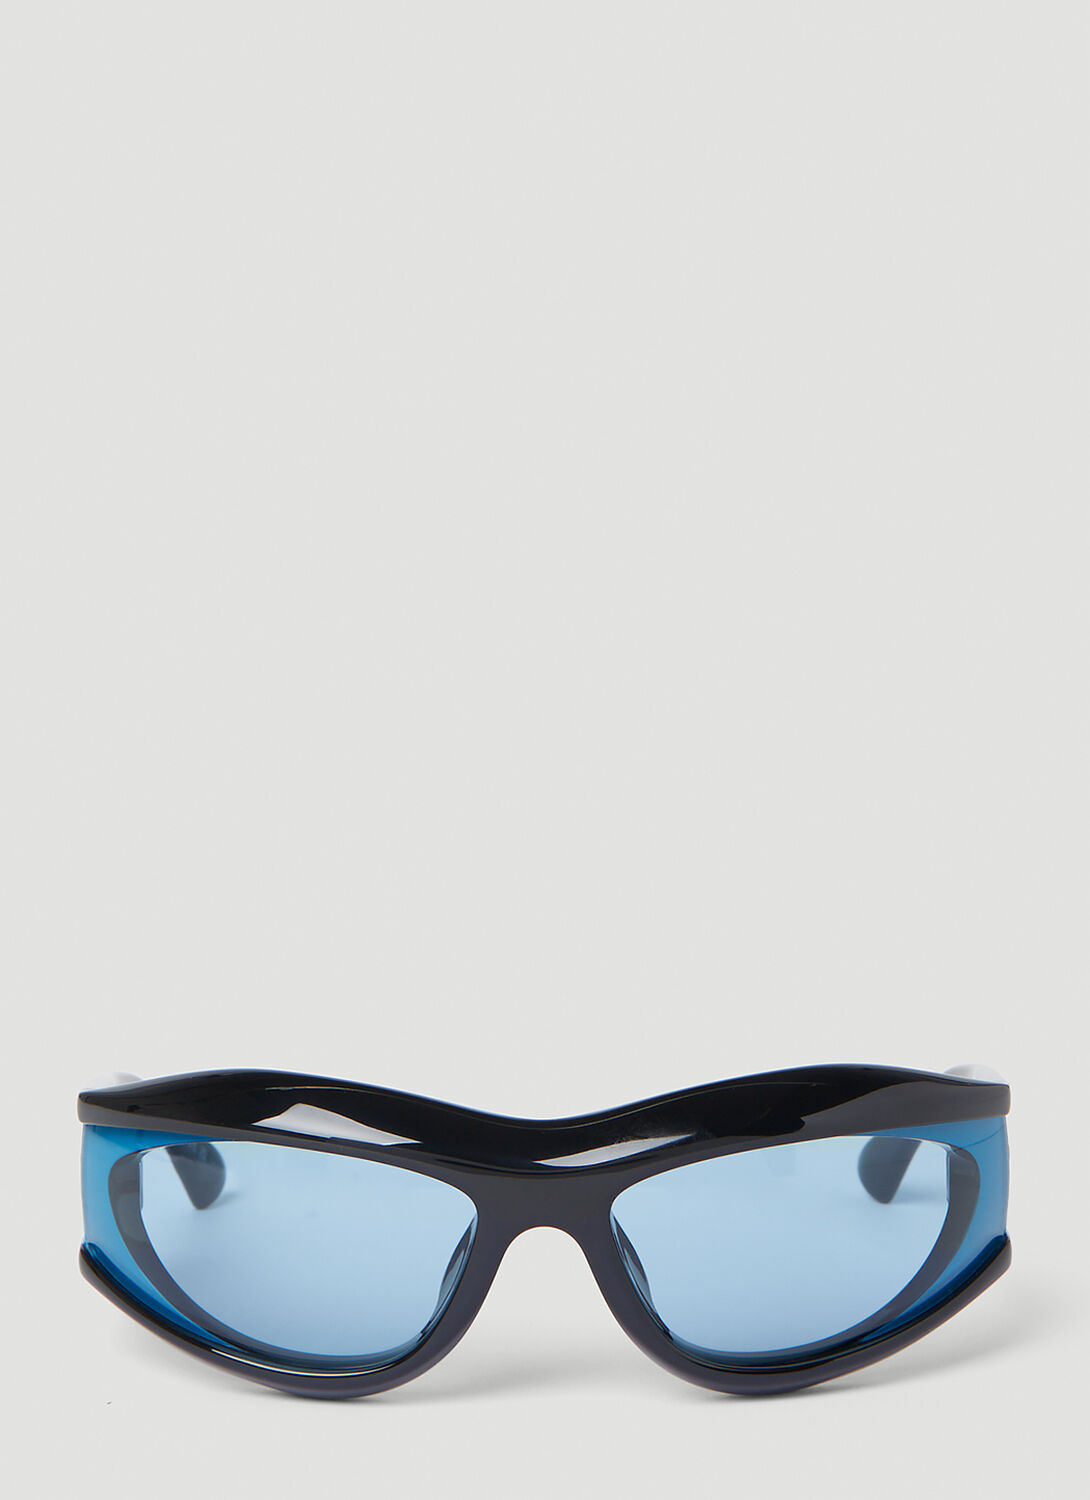 Bottega Veneta® Pleat Wraparound Sunglasses in Light Blue. Shop online now.